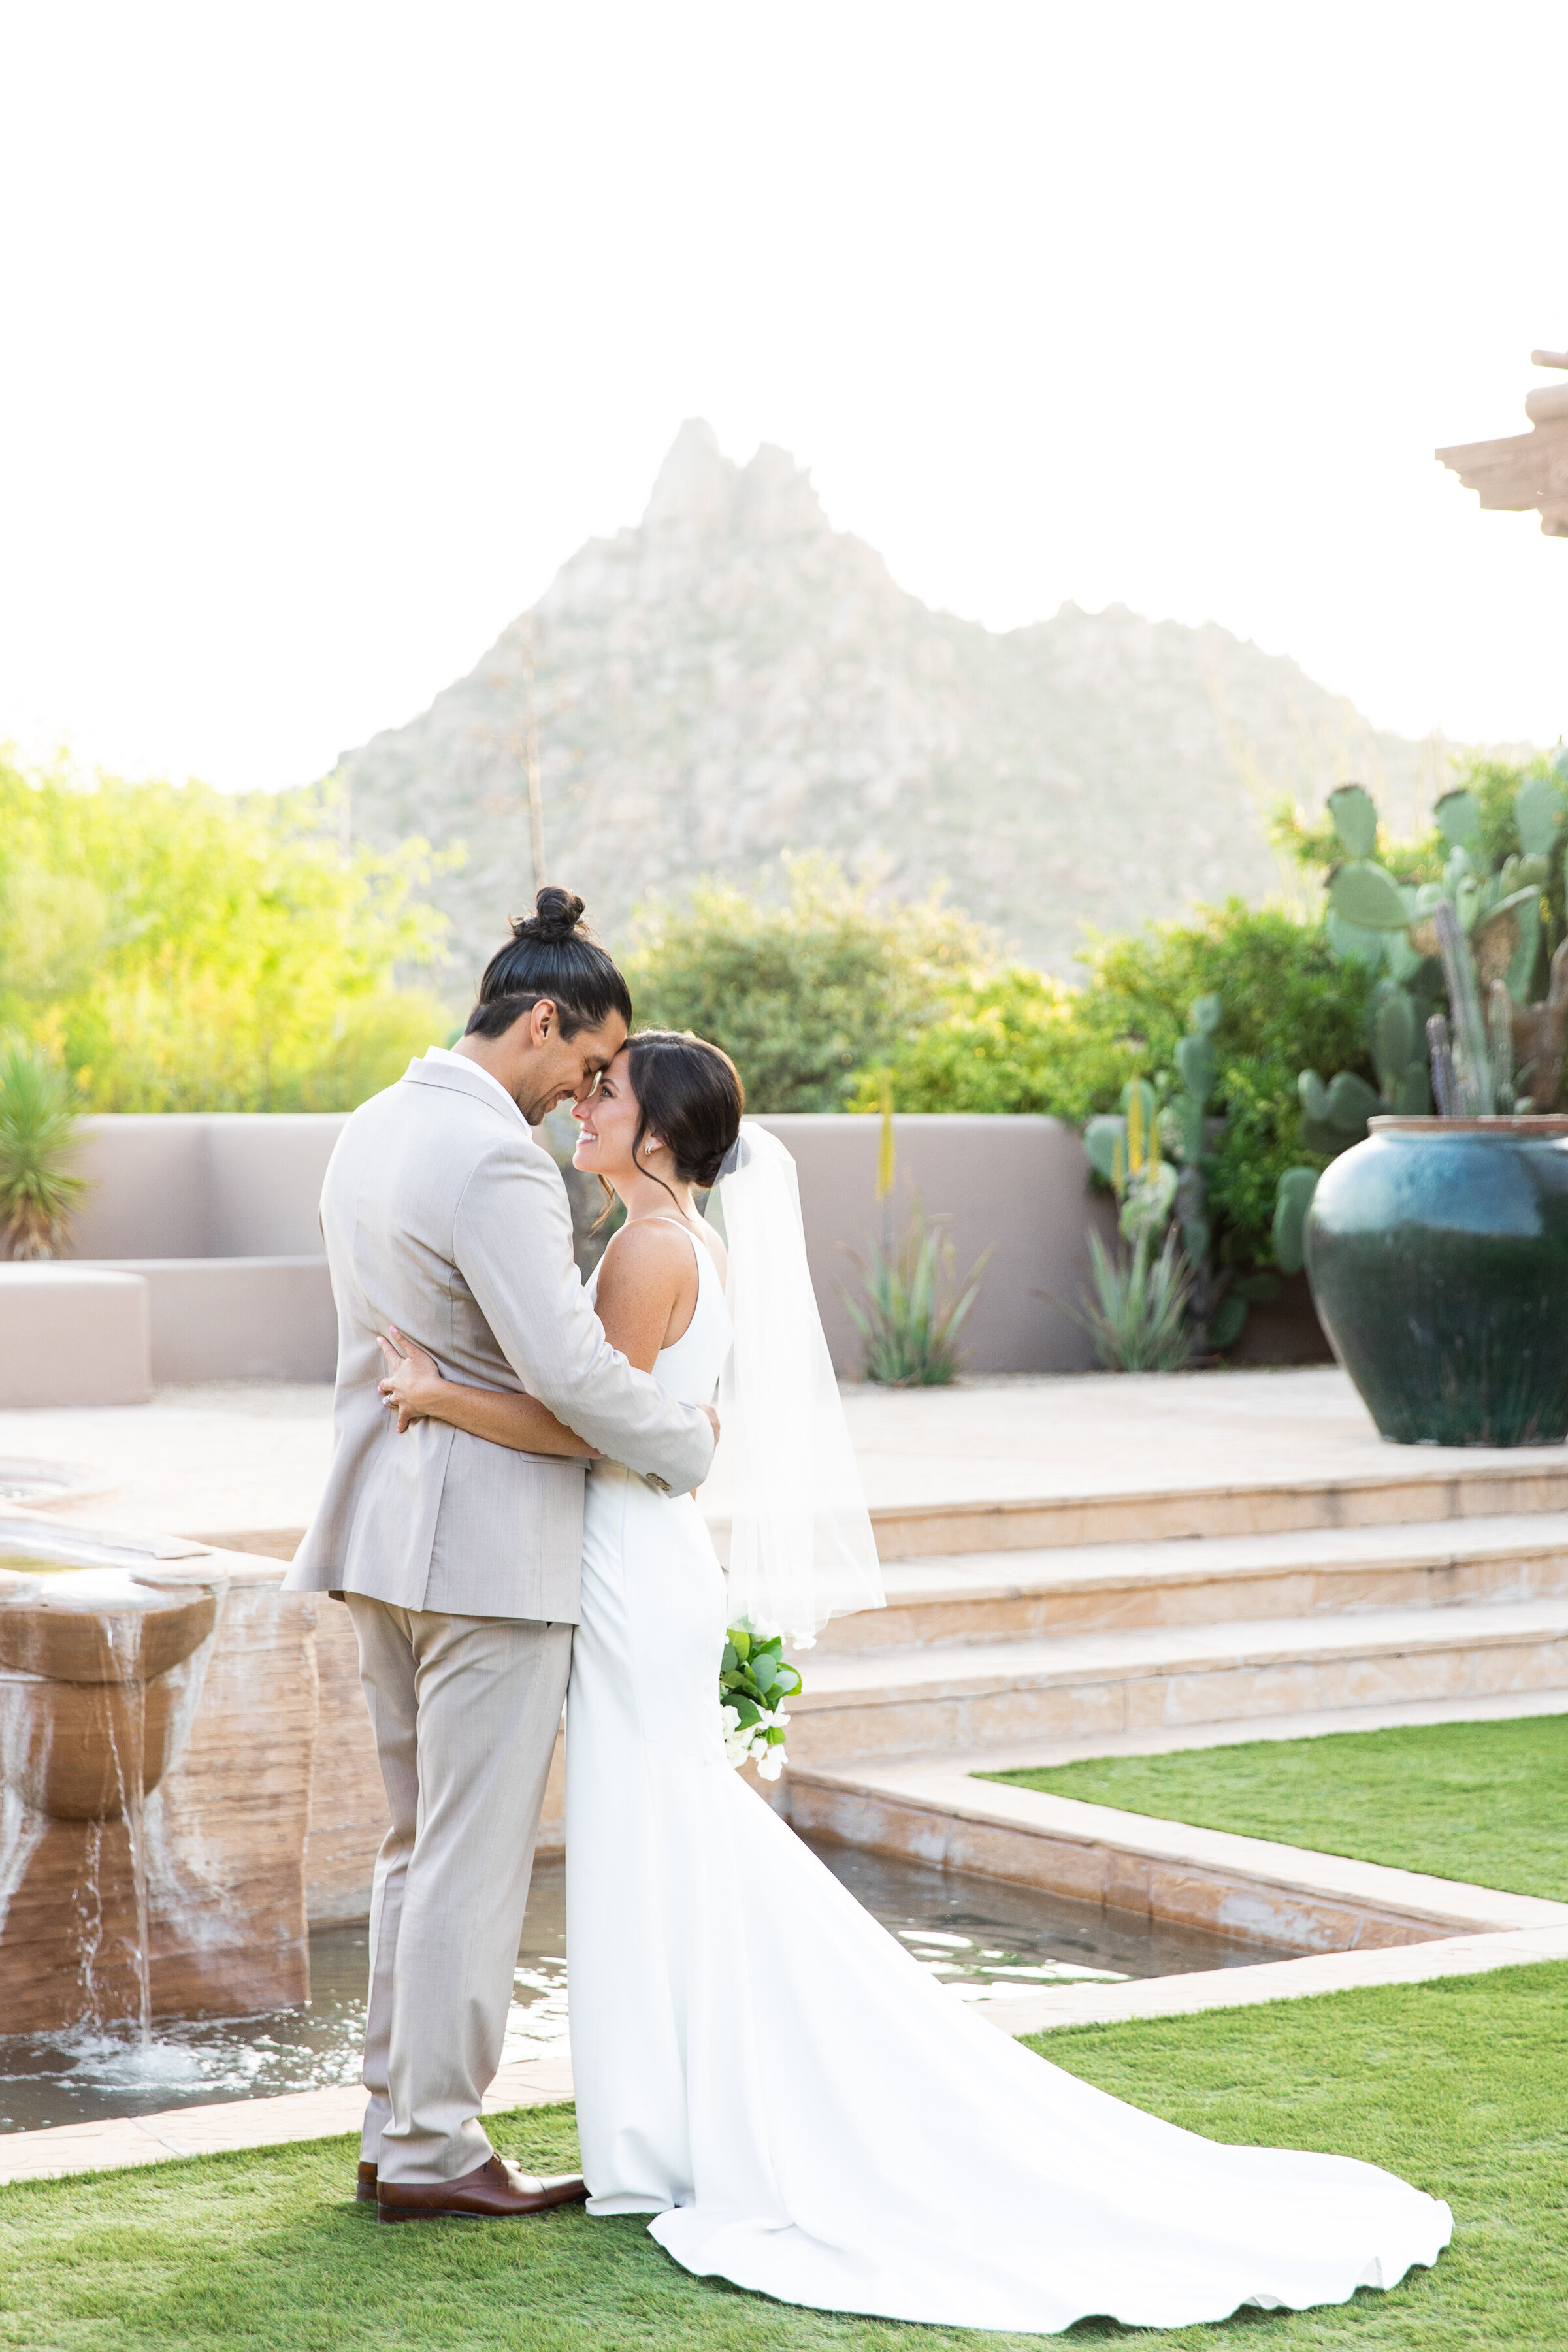 Karlie Colleen Photography - Elise & Lautaro - The Four Seasons Troon North - Scottsdale Arizona - Andrea Leslie Weddings-339